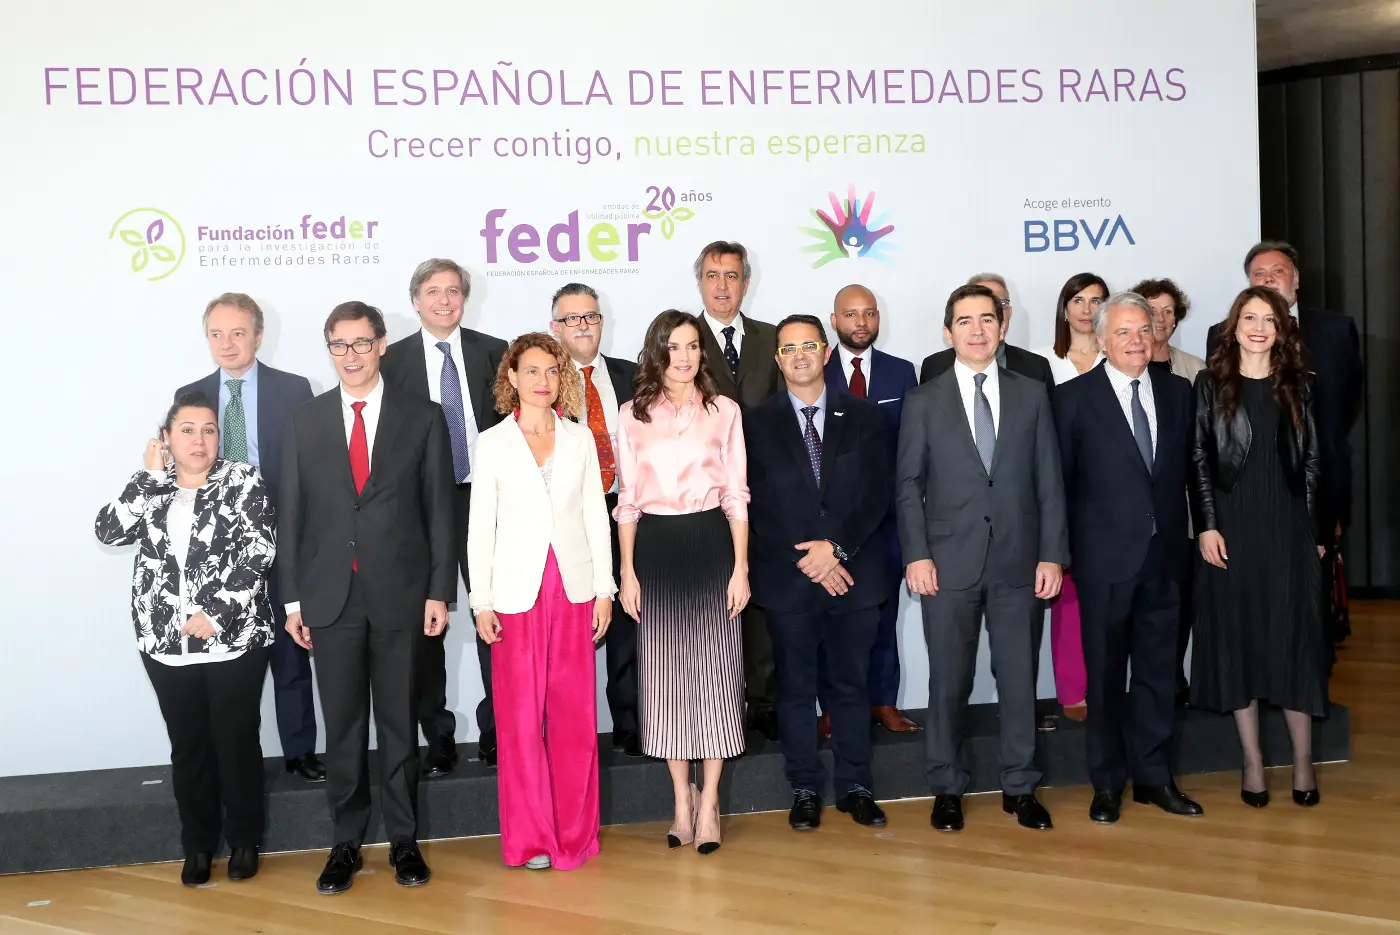 Queen Letizia attended Rare Disease day event